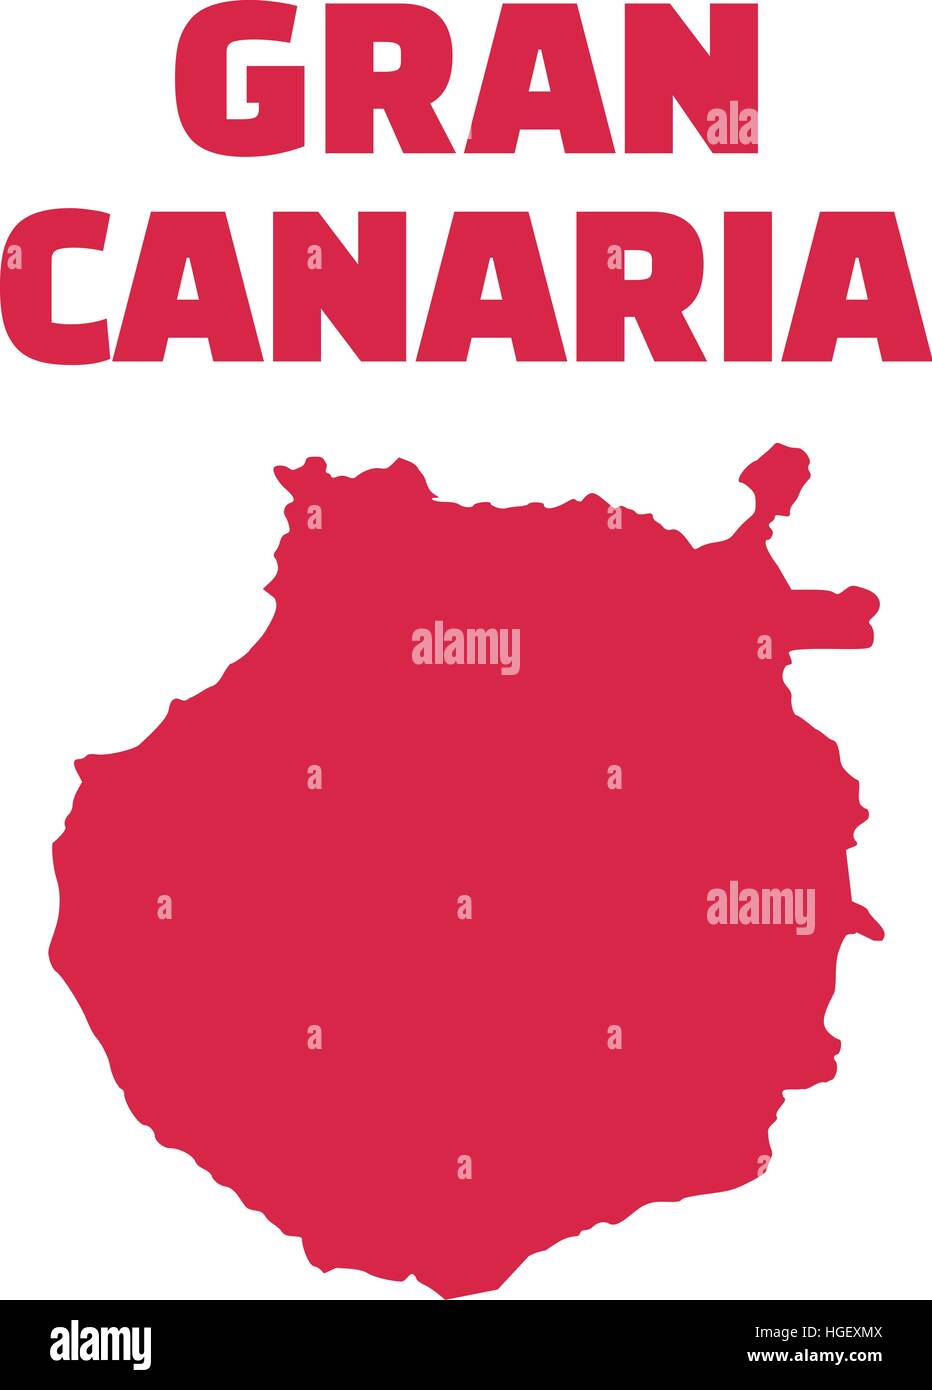 Gran Canaria Karte mit Namen Stock Vektor